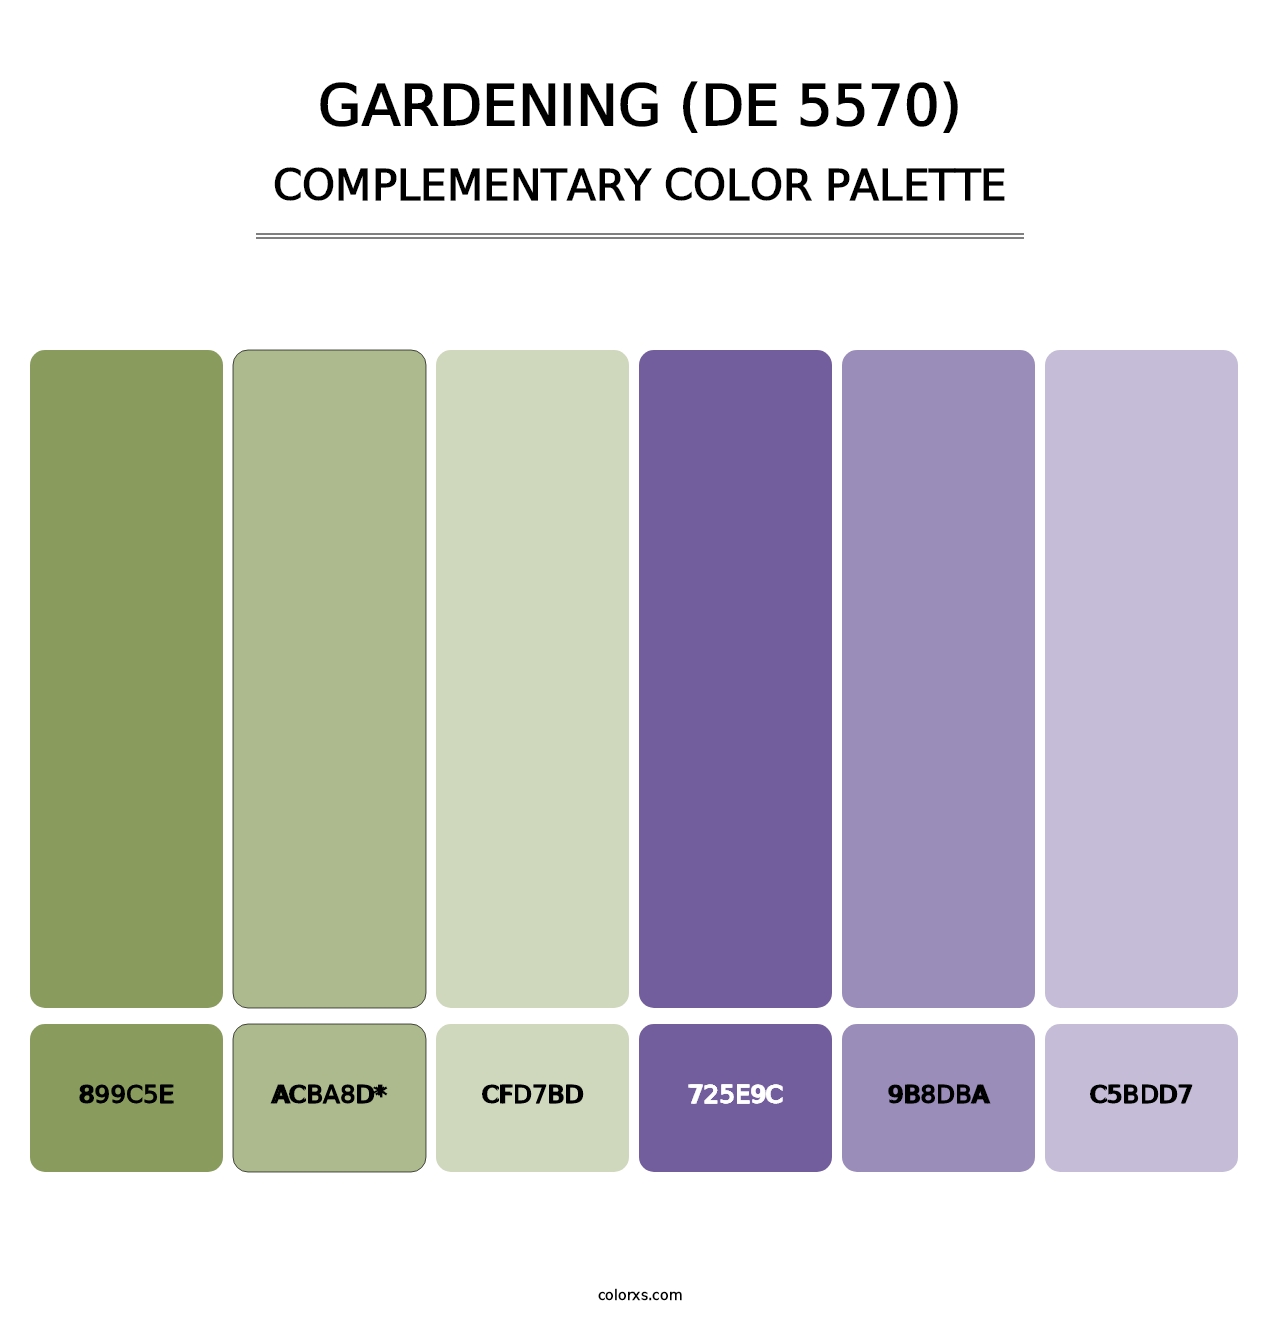 Gardening (DE 5570) - Complementary Color Palette